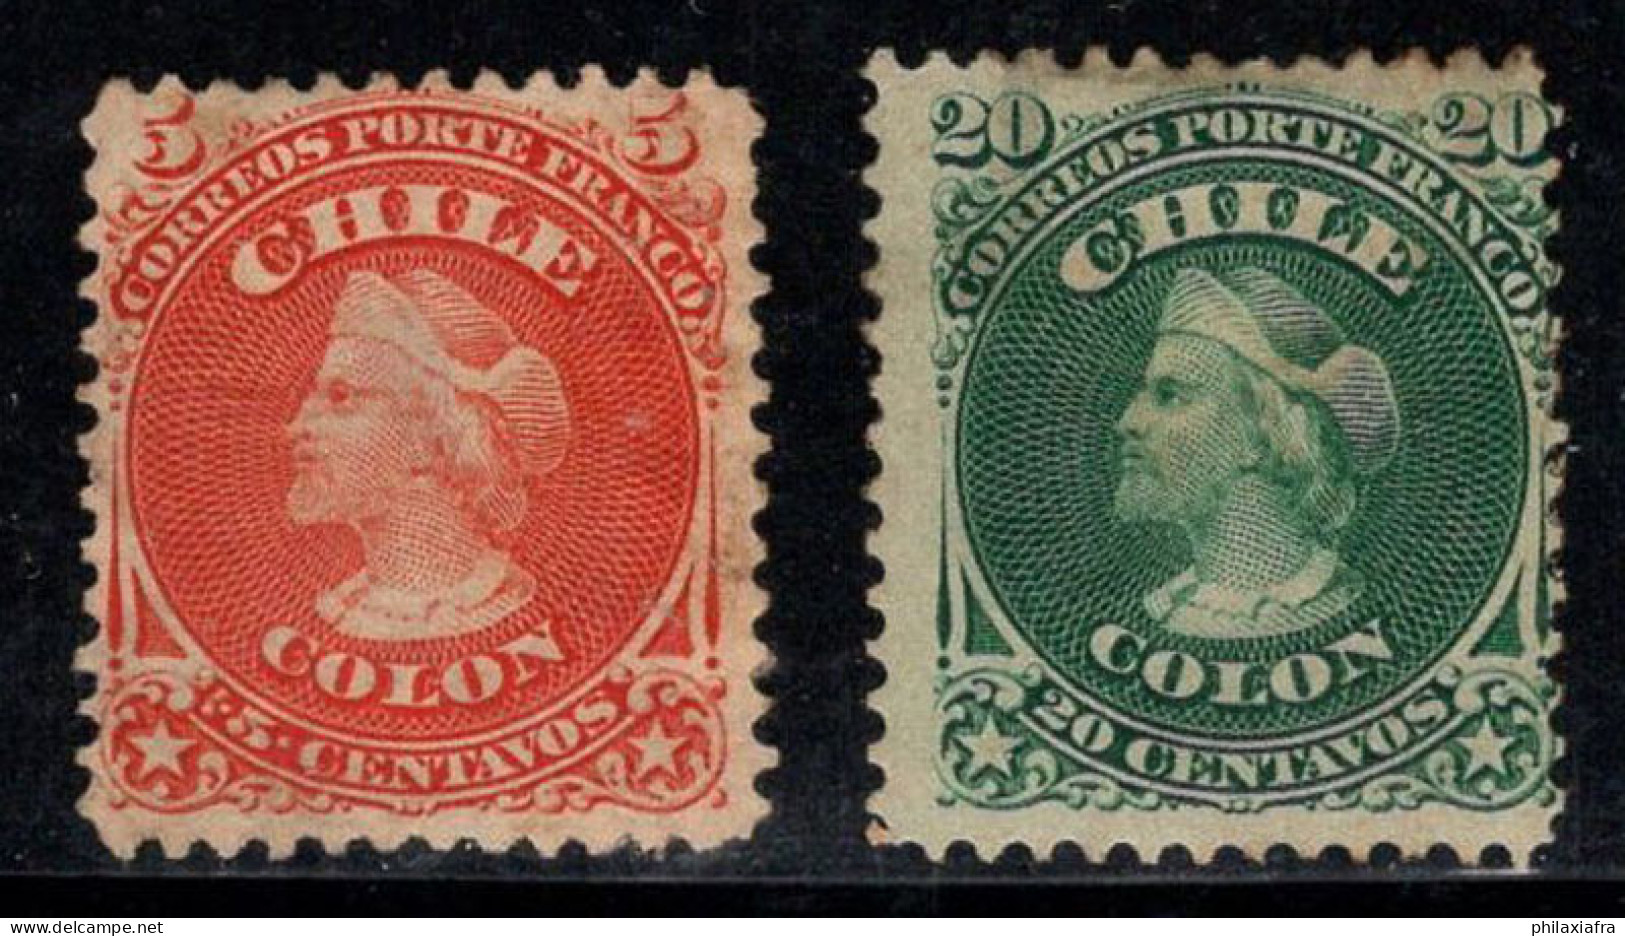 Chili 1867 Mi. 10, 12 Neuf * MH 20% Christophe Colomb - Chile